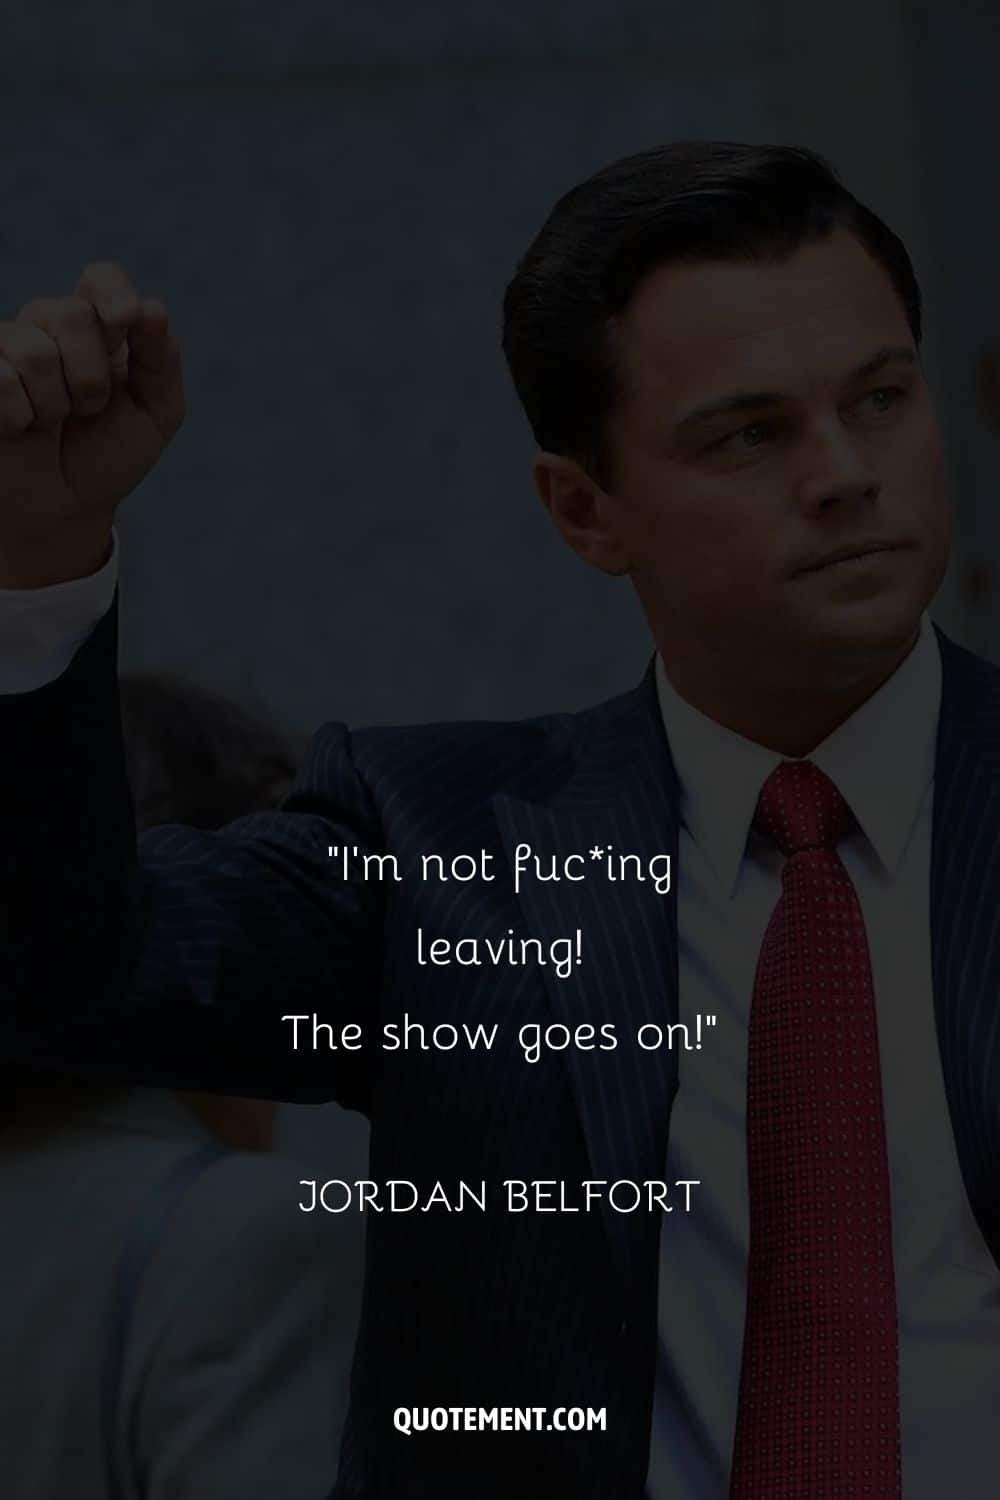 Leonardo DiCaprio wearing a red tie representing Jordan Belfort motivational quote
